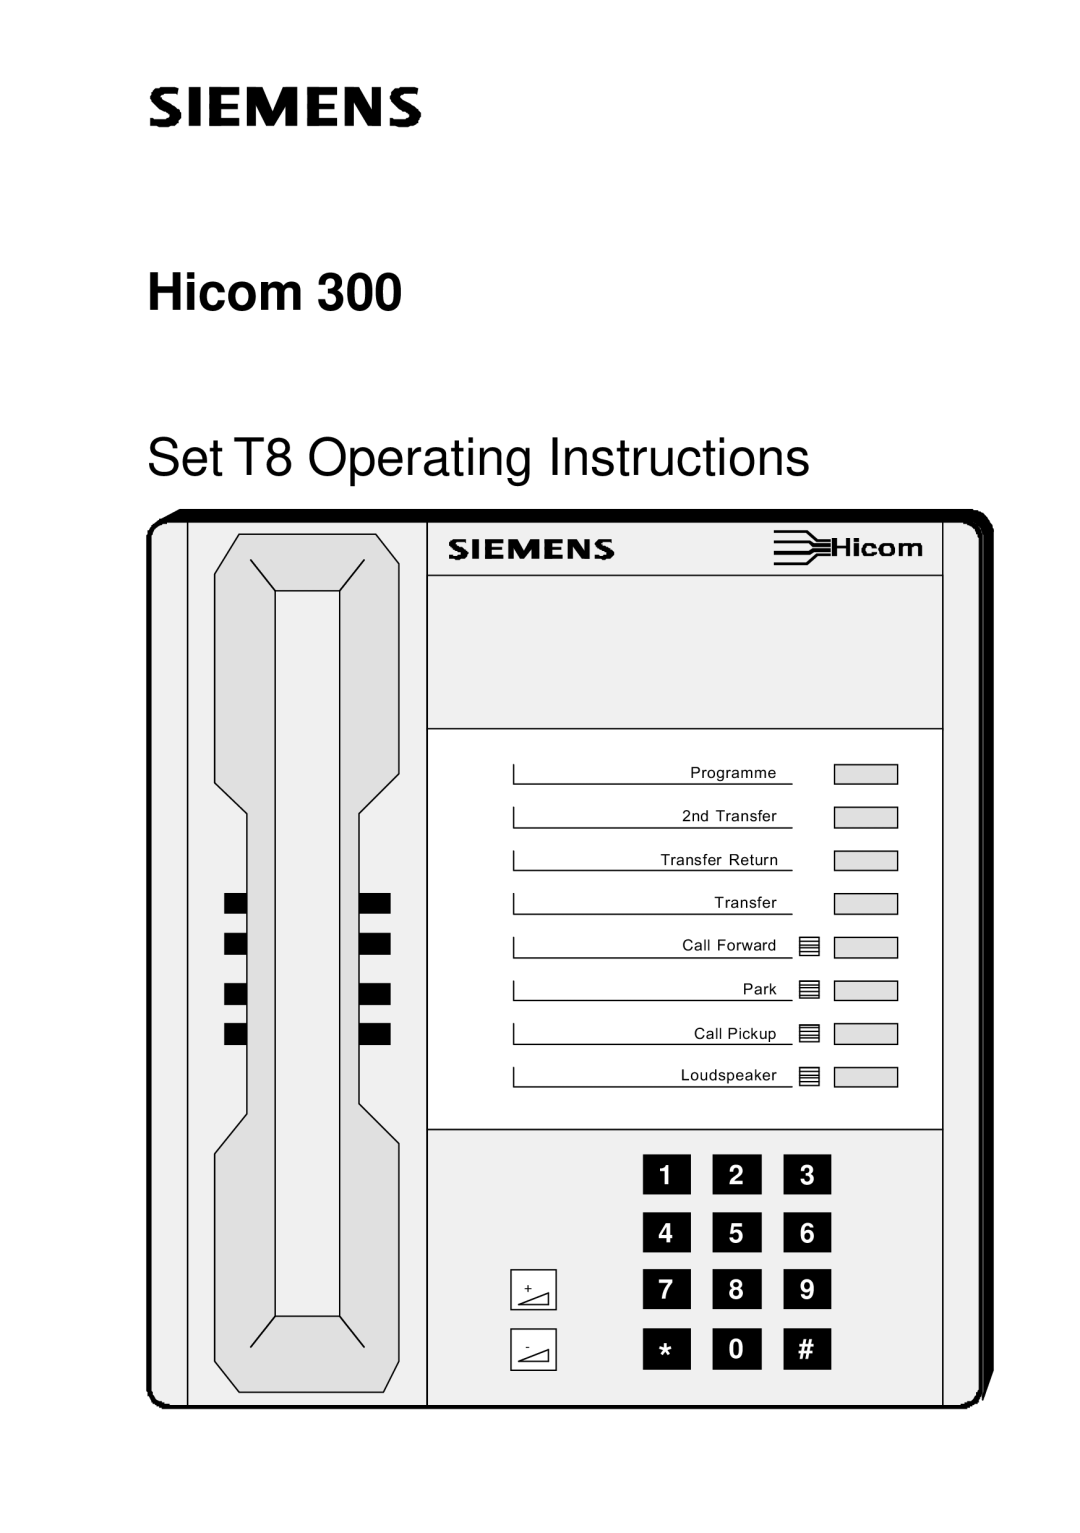 Siemens 300 operating instructions Hicom 